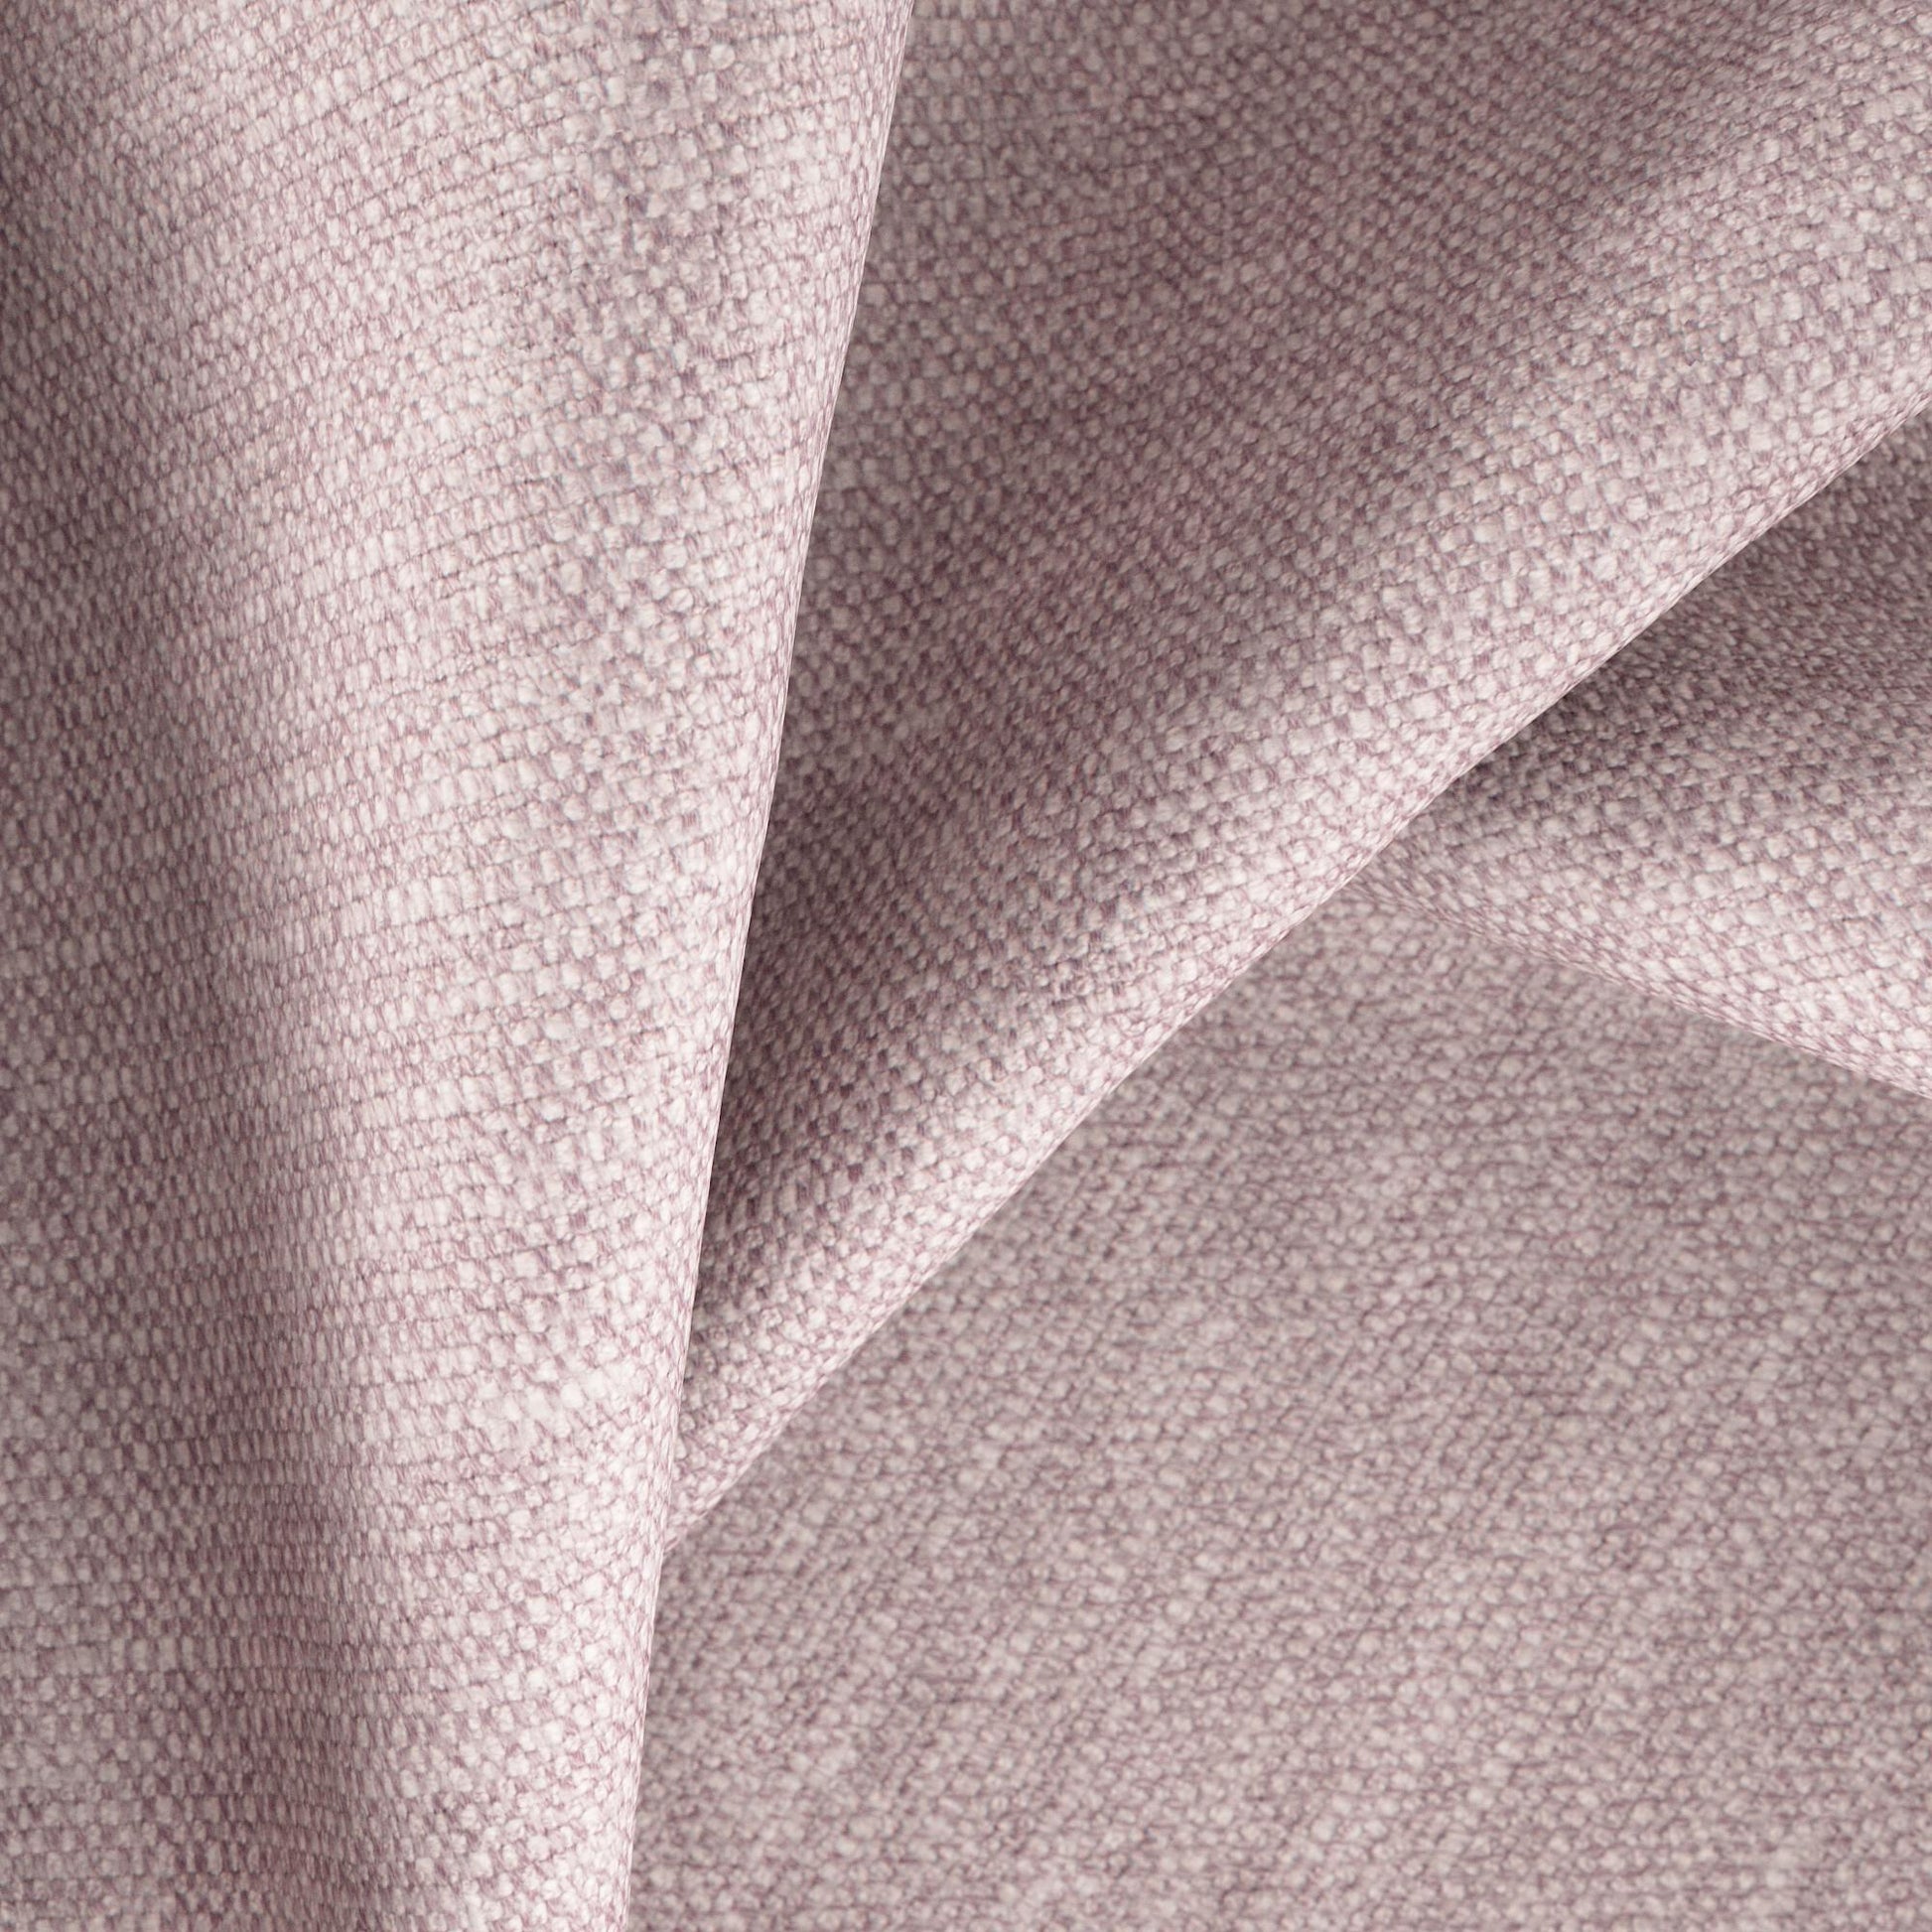 Home Fabrics - FibreGuard - Colourwash - 36-Parma - Fabric per Meter